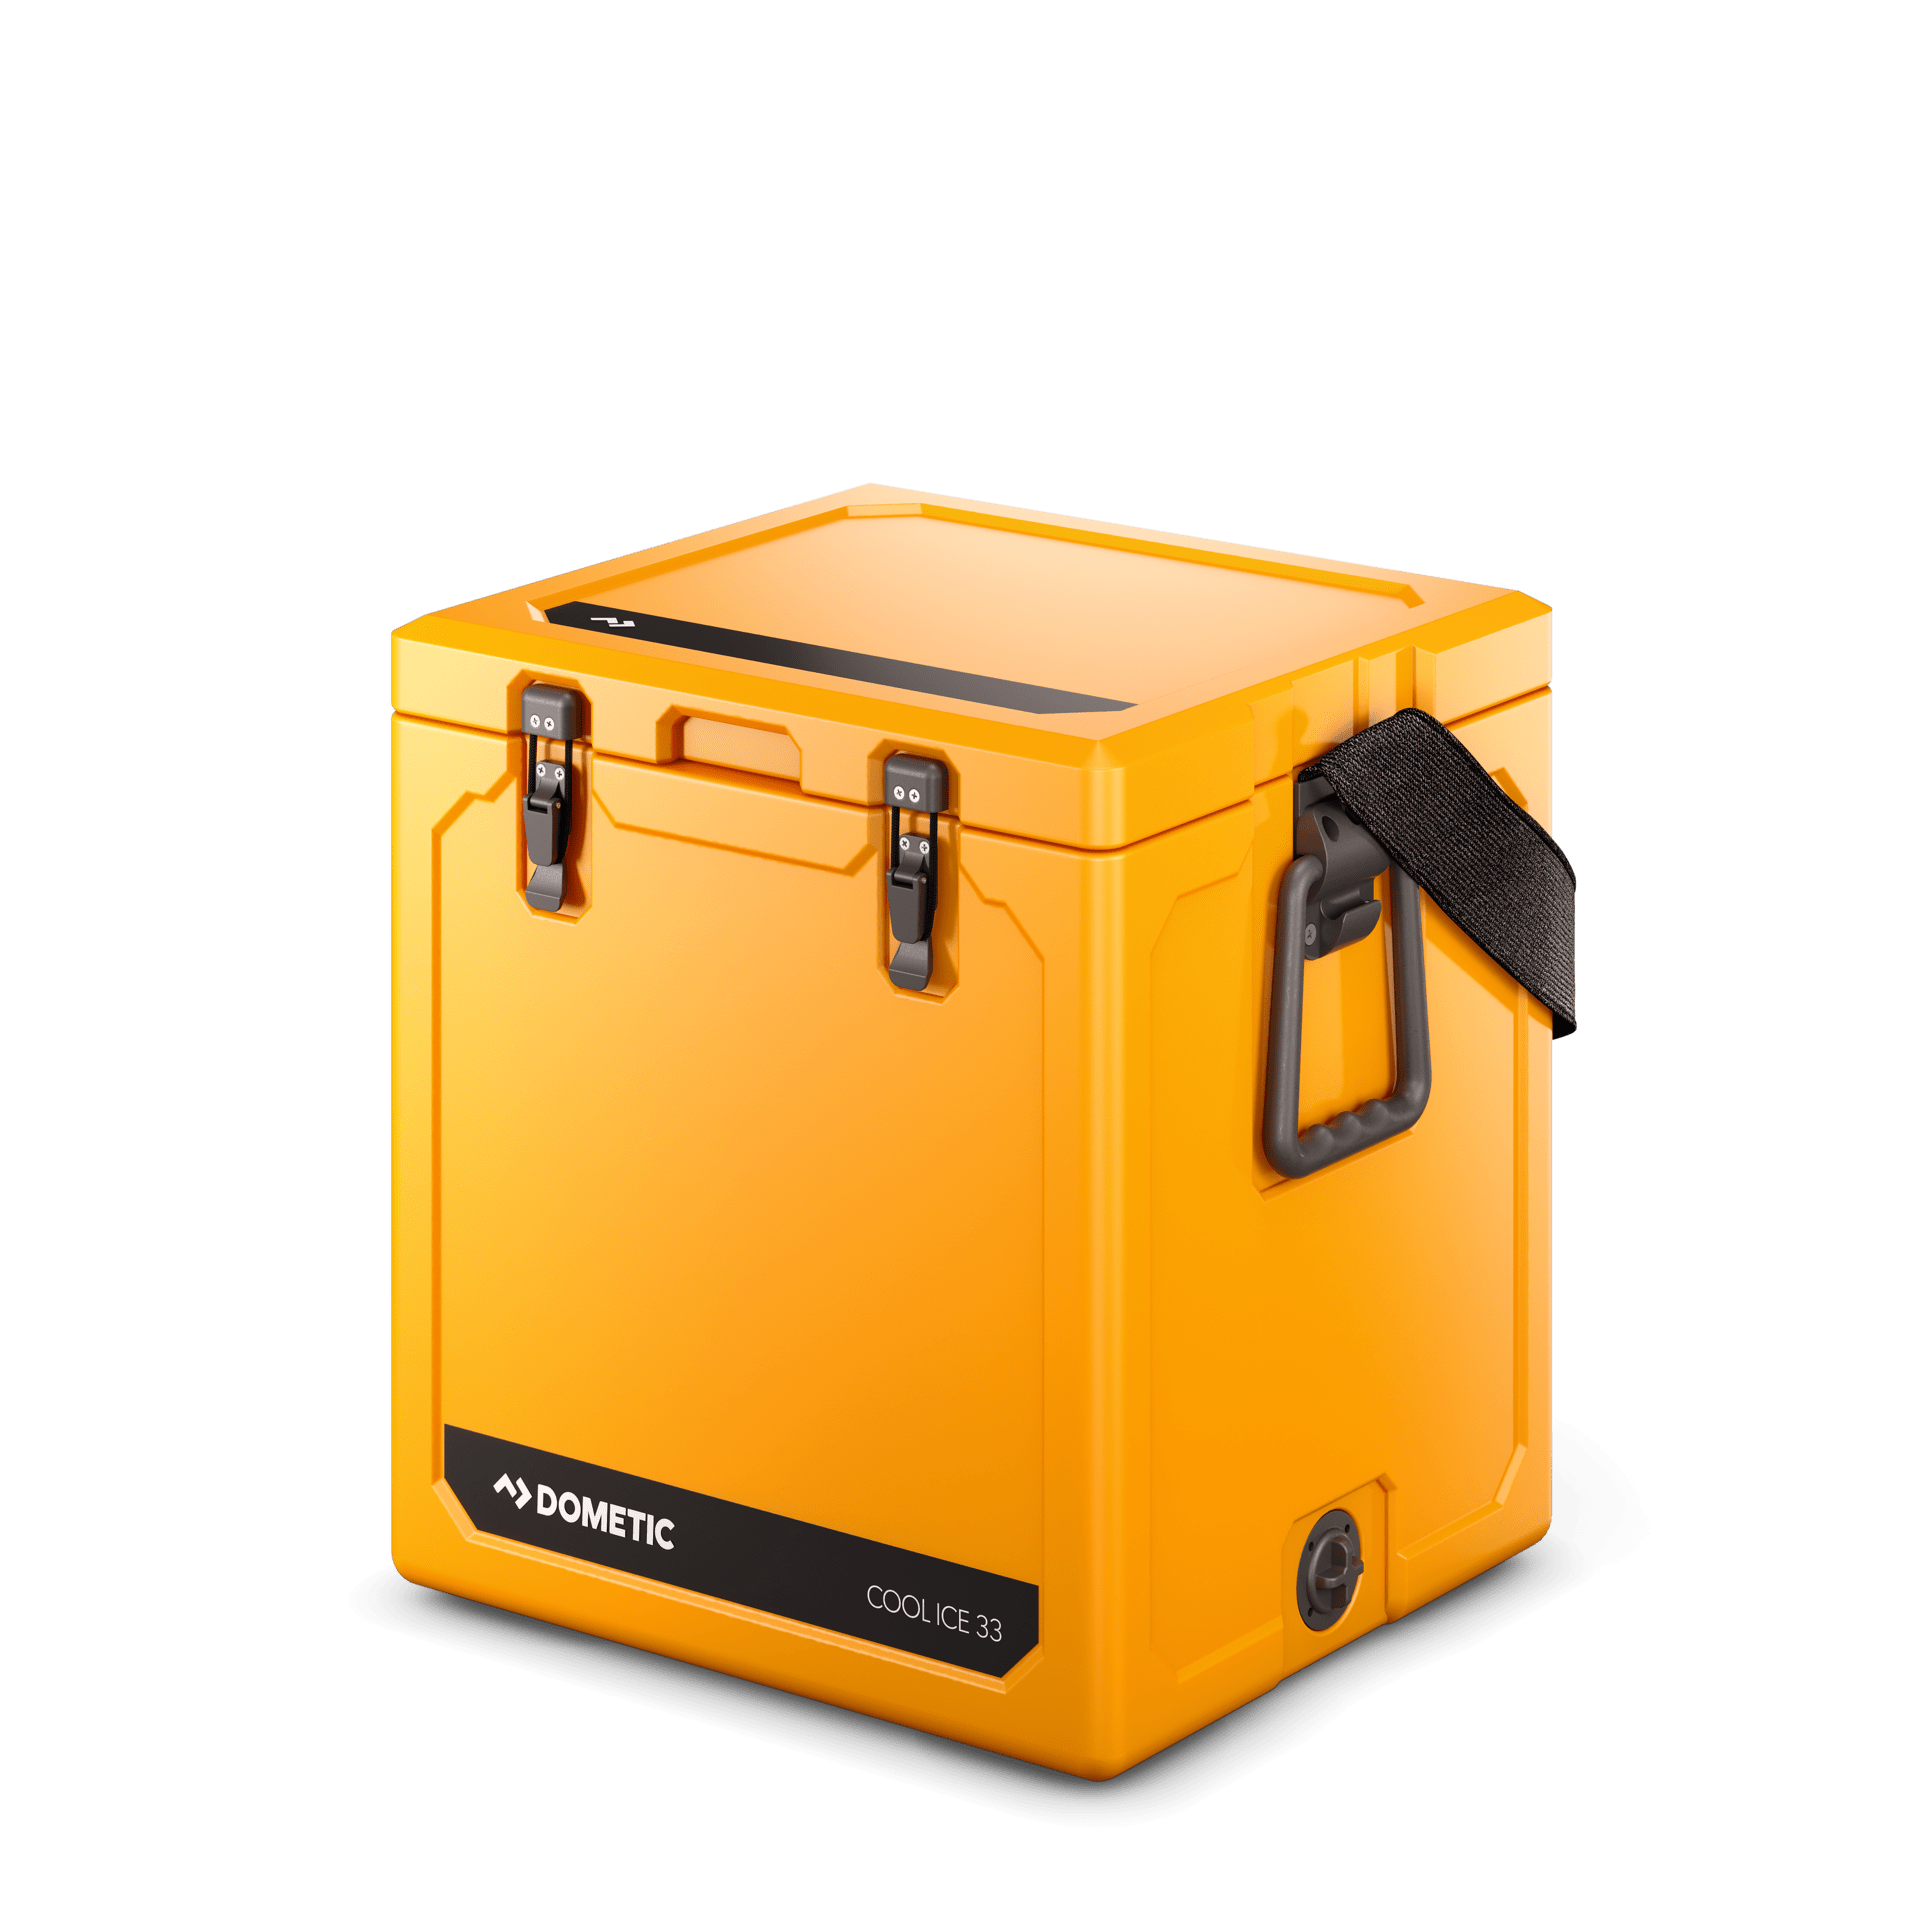 Dometic WCI33 Cool Ice Box ถังเก็บความเย็น ขนาด 33 ลิตร เก็บความเย็นได้นาน  2-3 วัน